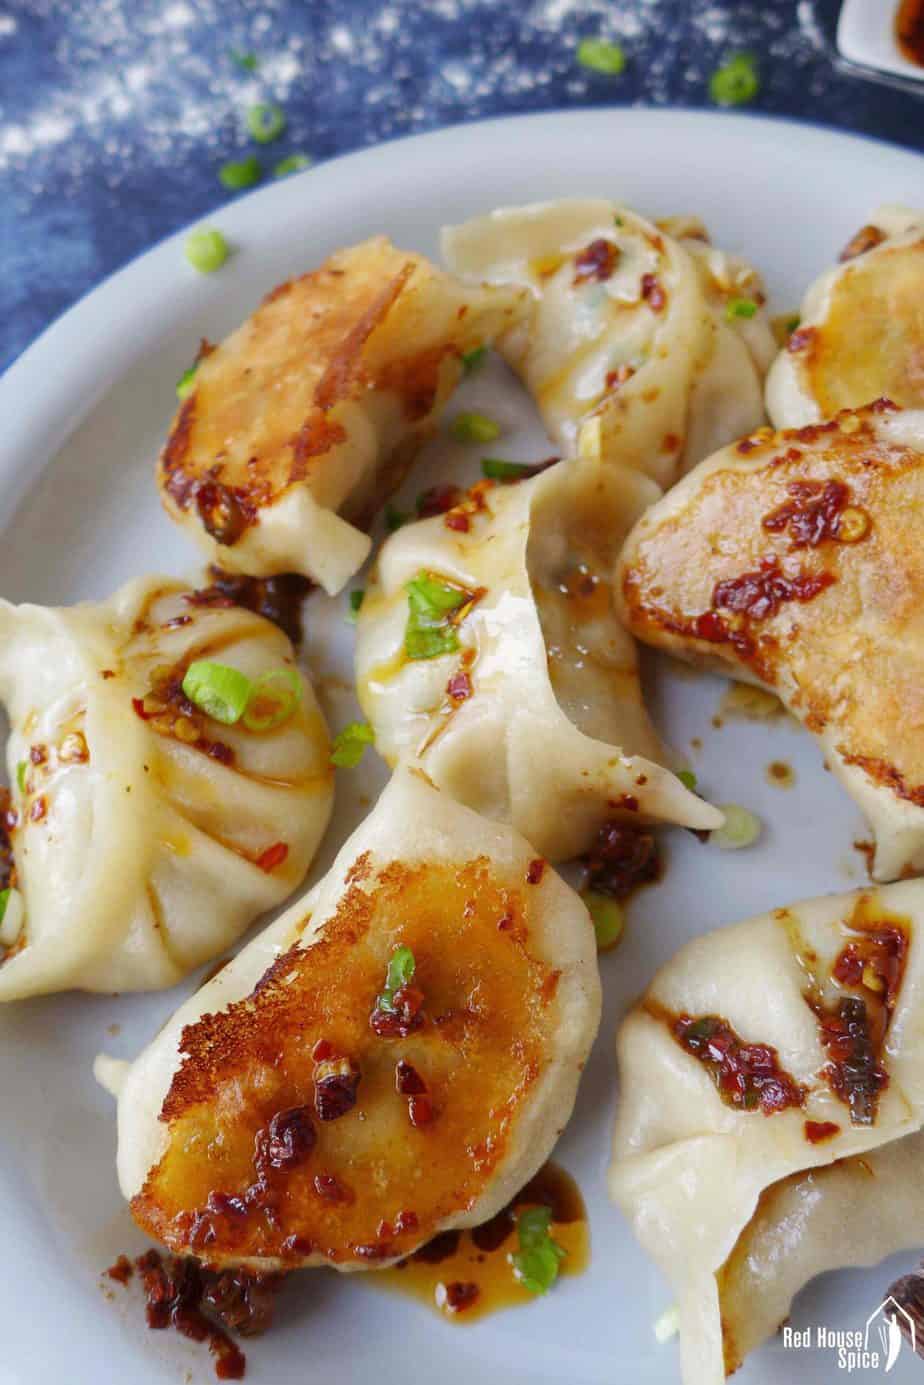 Pan fried vegan dumplings